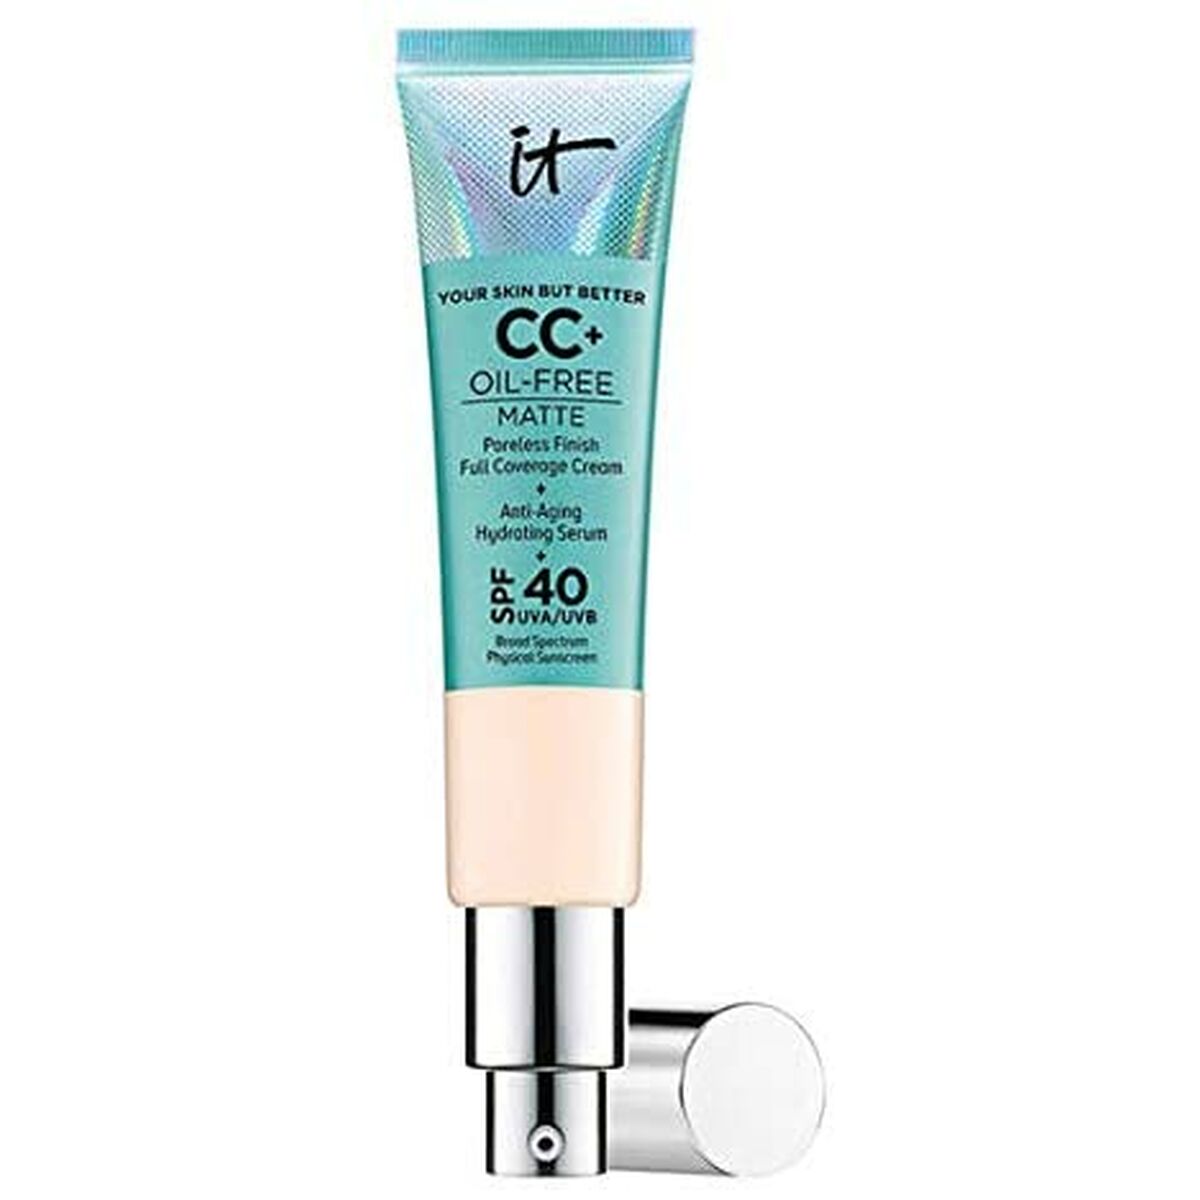 CC Cream It Cosmetics Oil Free Fair light Spf 40 32 ml-0